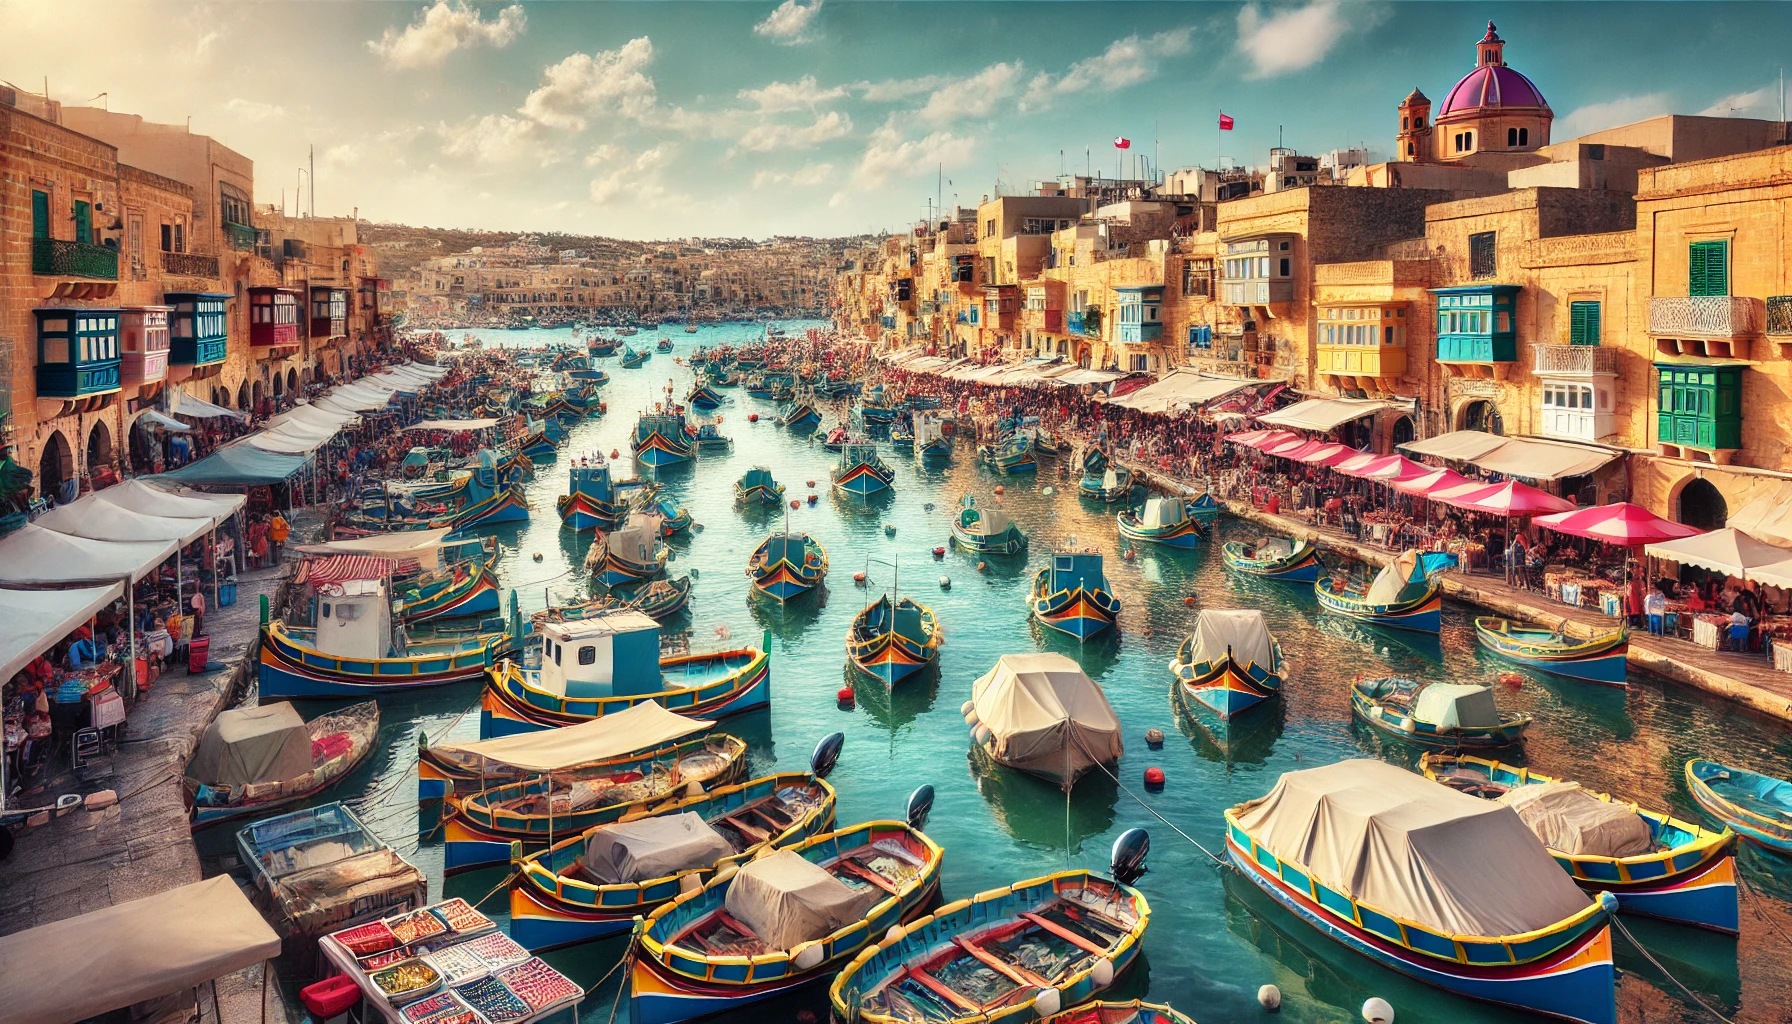 beauty and vibrant atmosphere of Gozo and Marsaxlokk